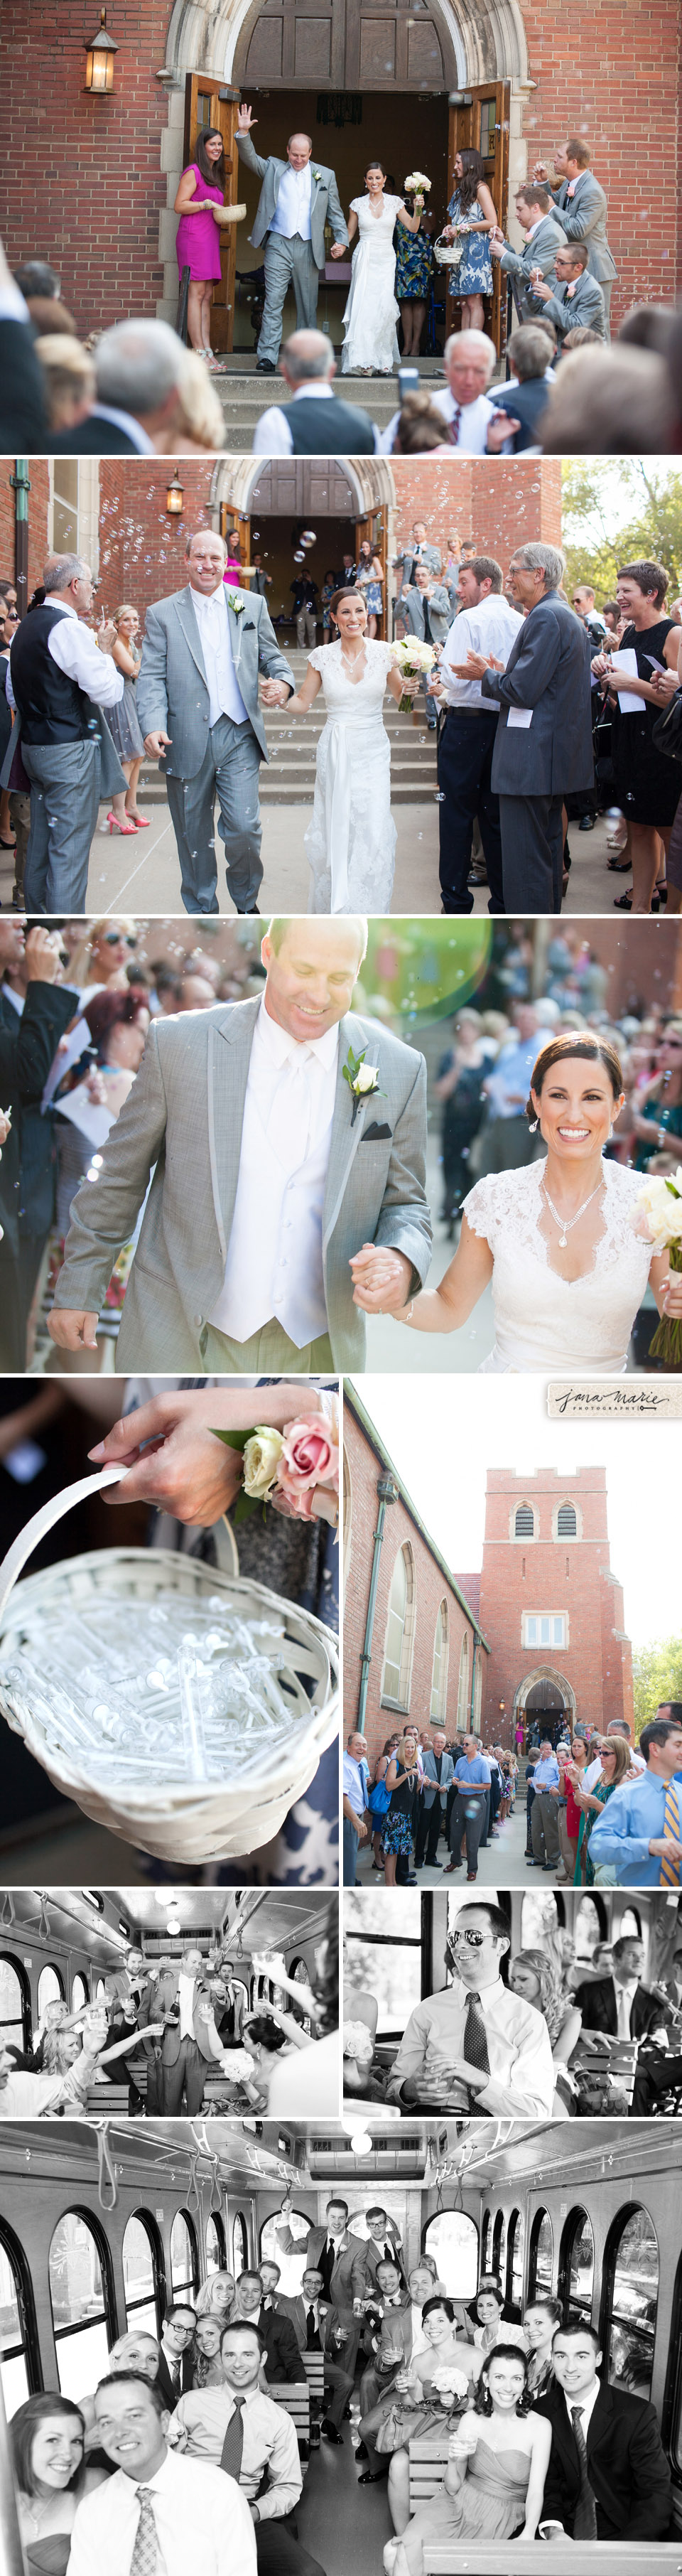 Bubble exit, Creative weddings, Grey and peach color schemes, Bridal Extraordinaire, Jana Marler